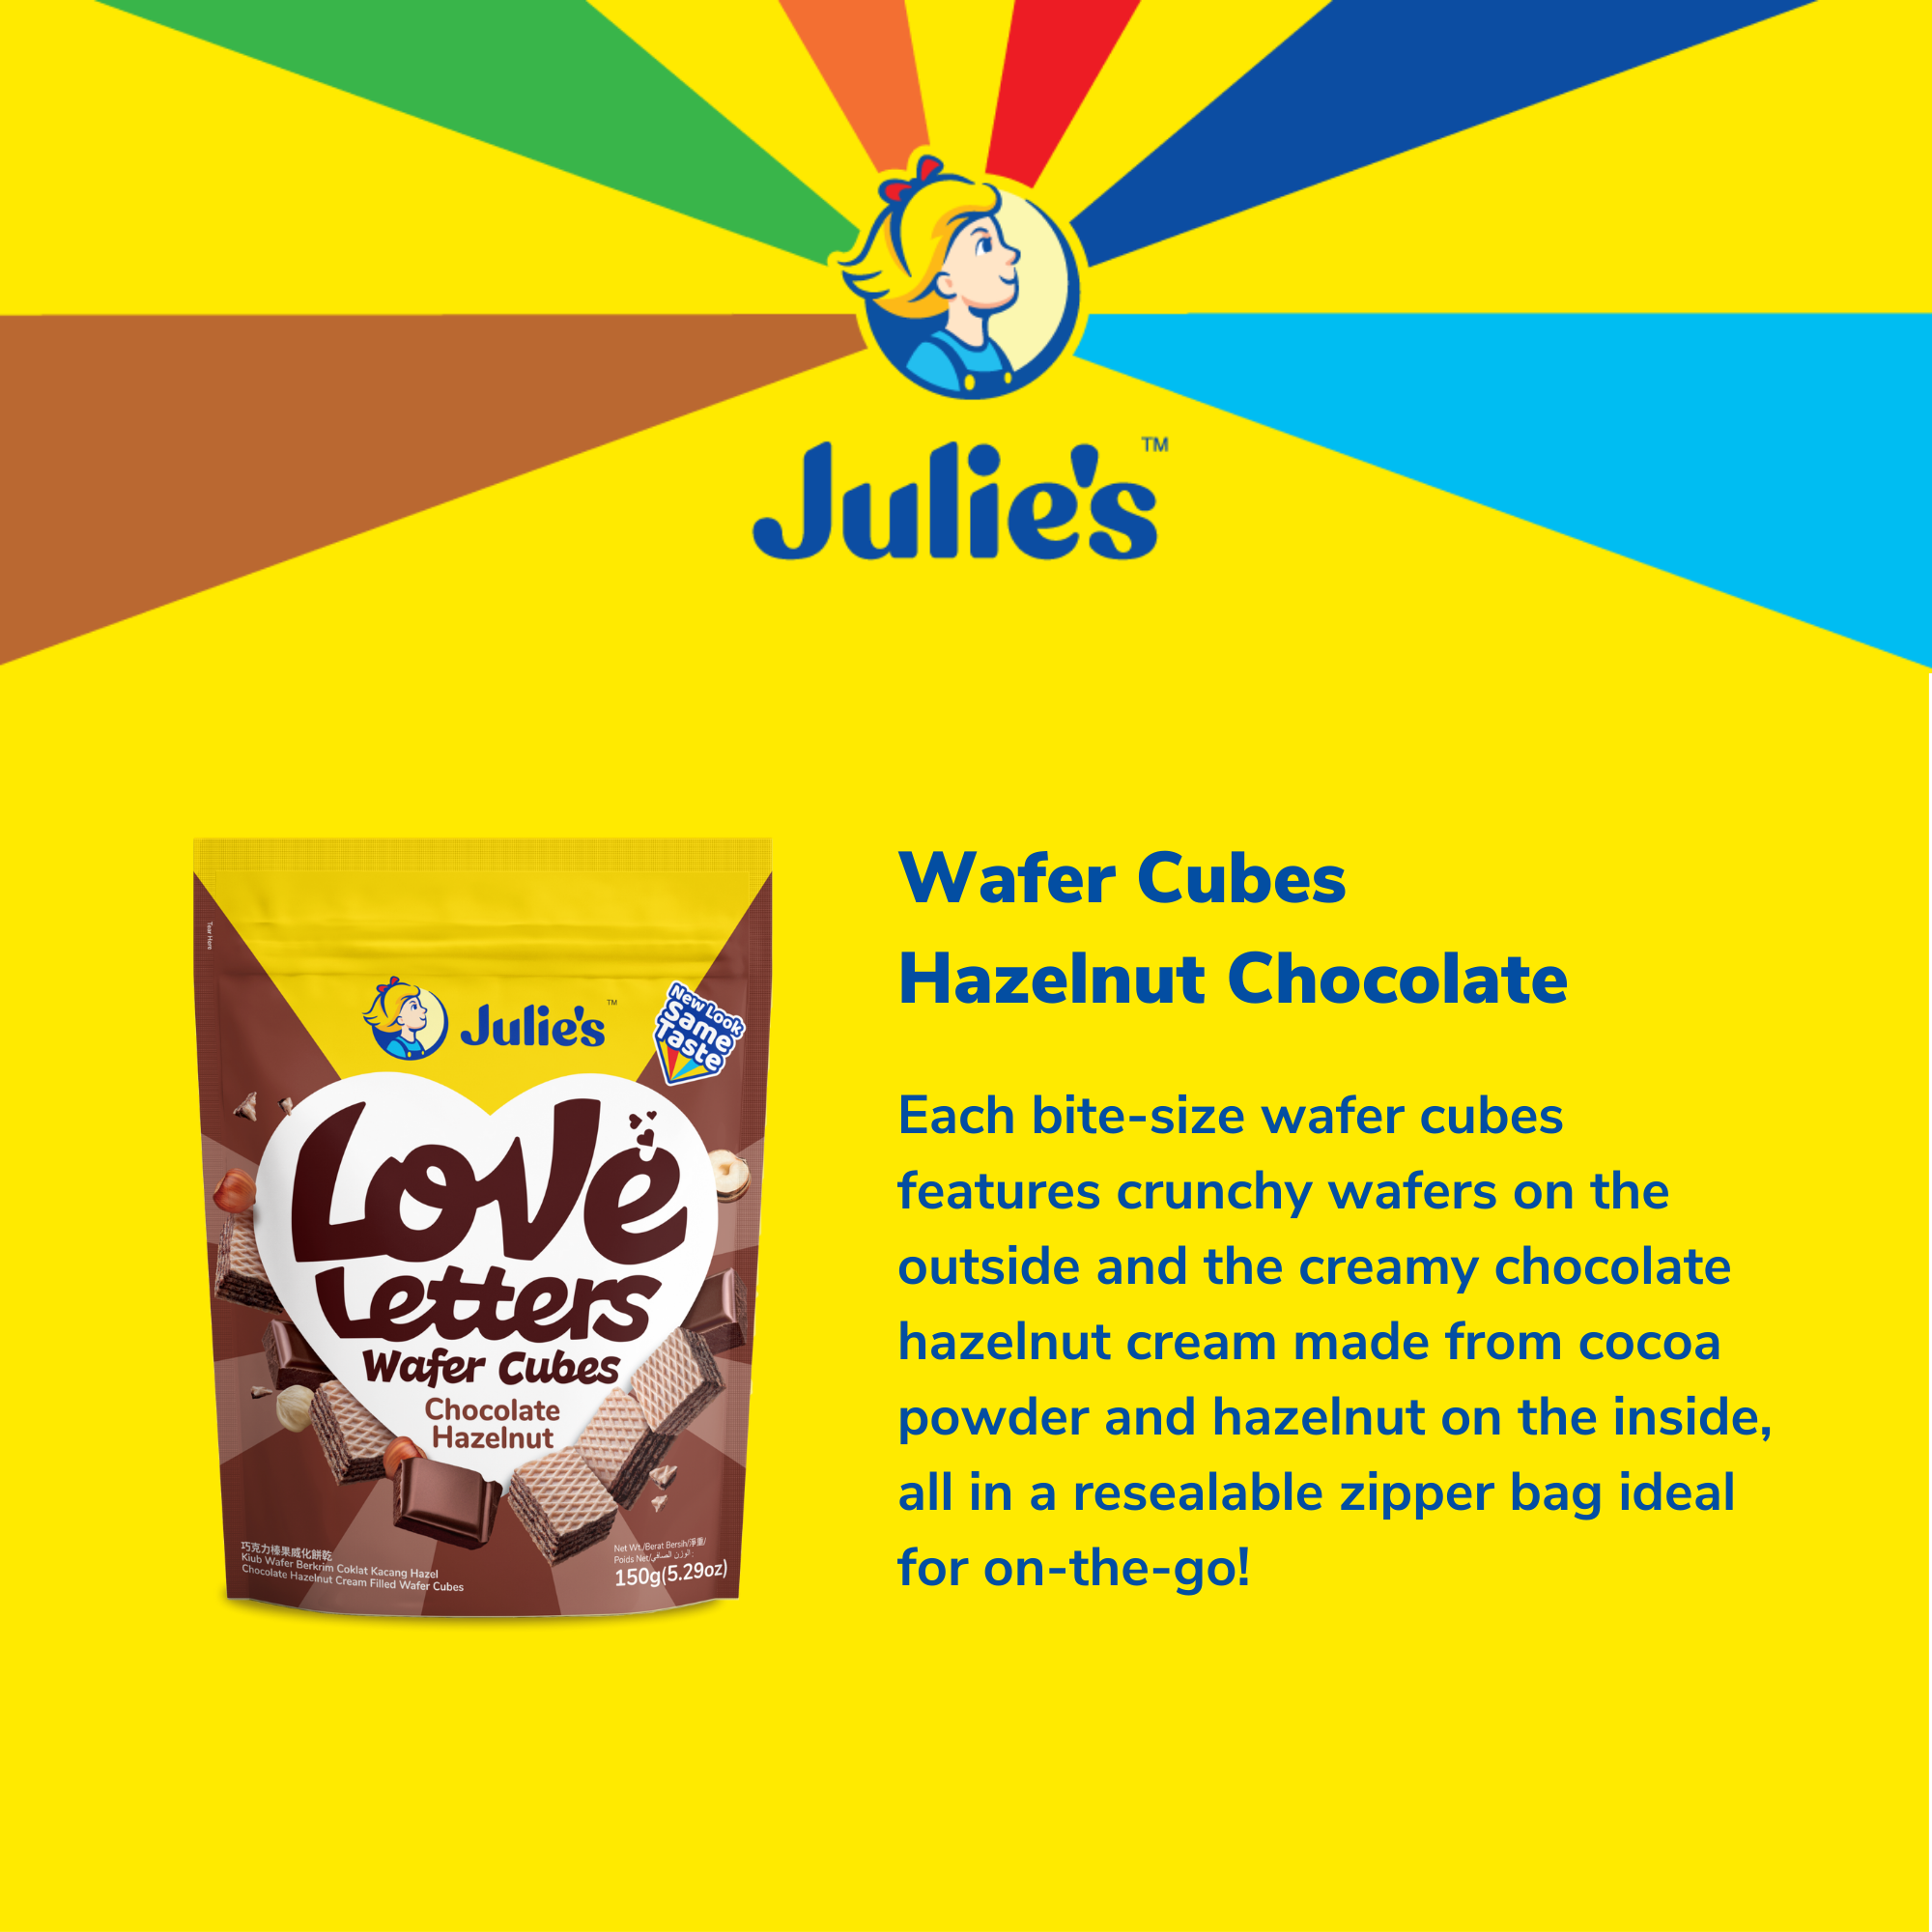 Julie's Love Letters Wafer Cubes Chocolate Hazelnut 150g x 6 packs